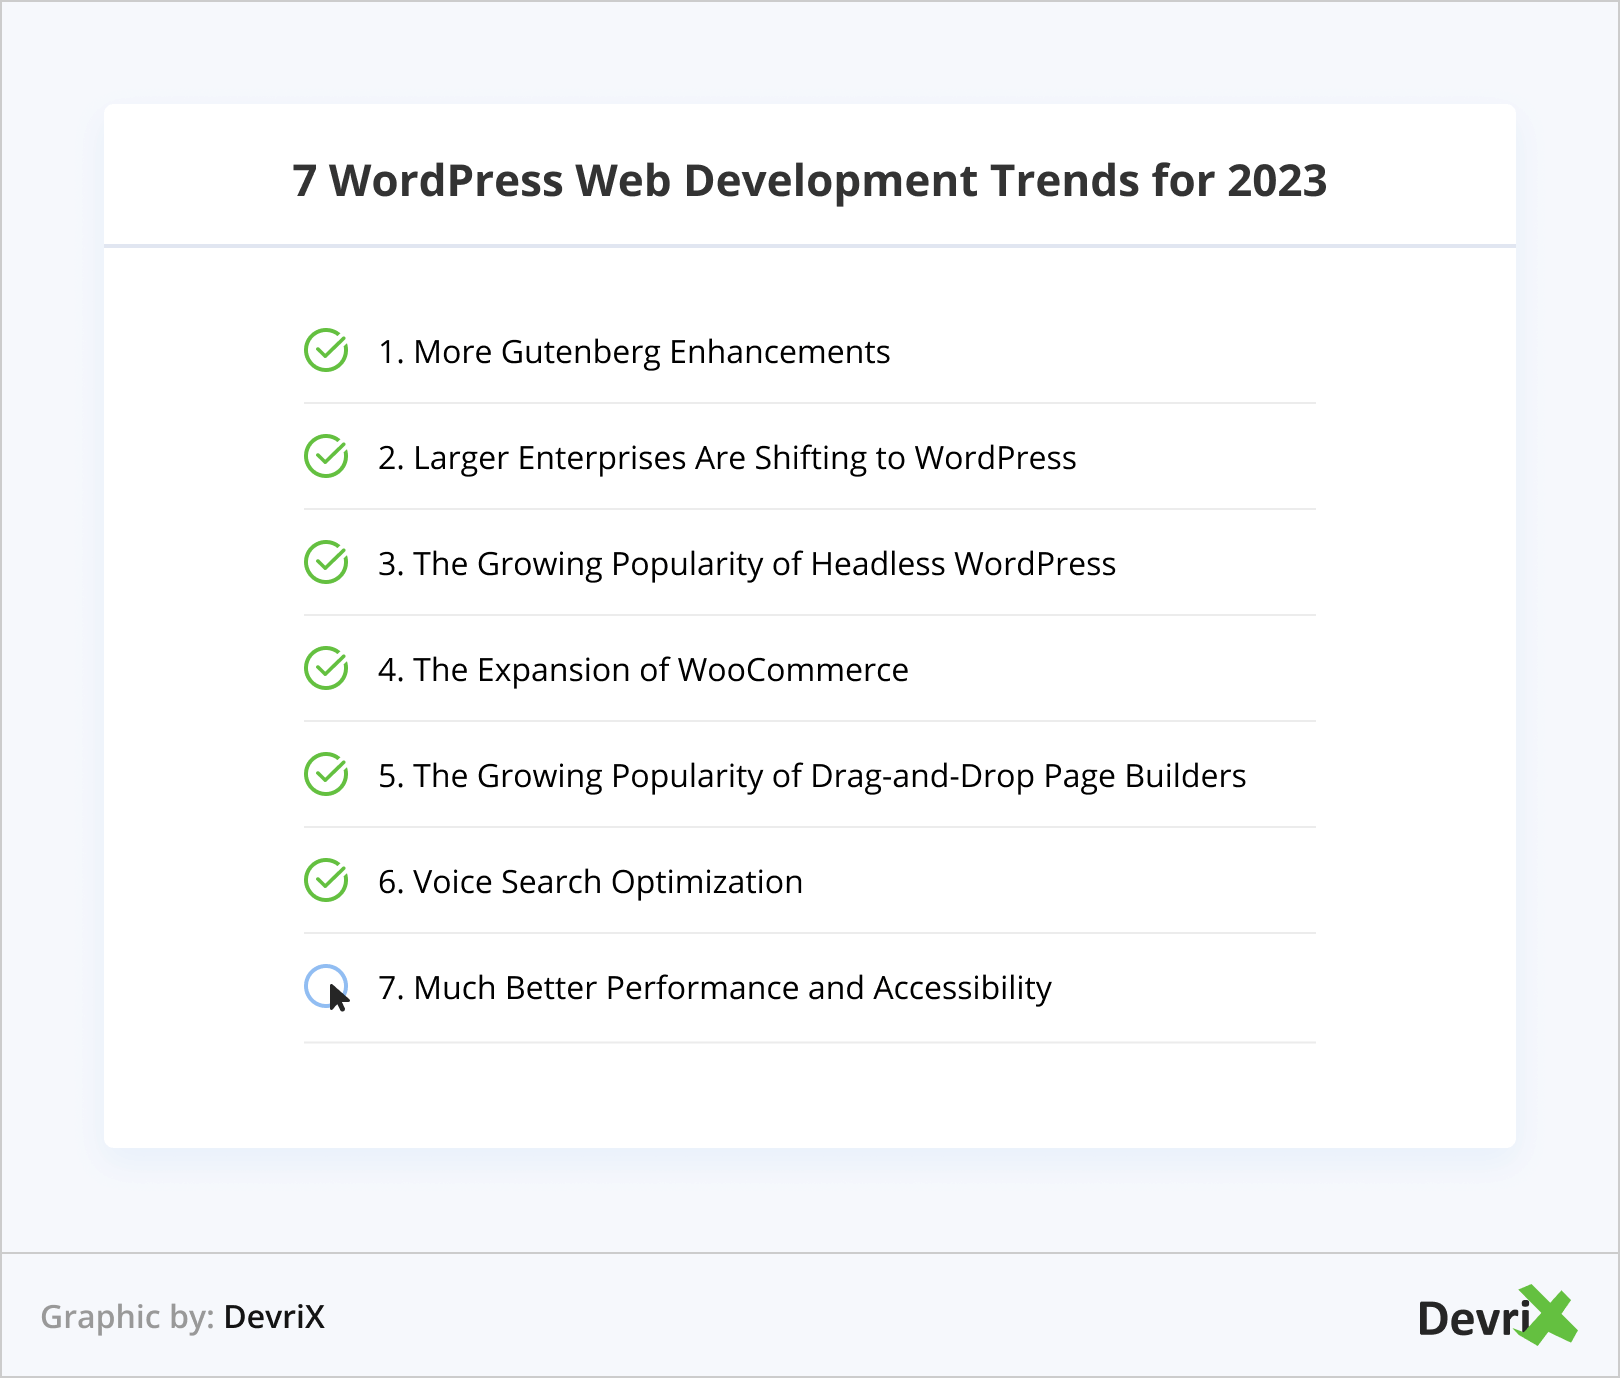 7 WordPress Web Development Trends for 2023